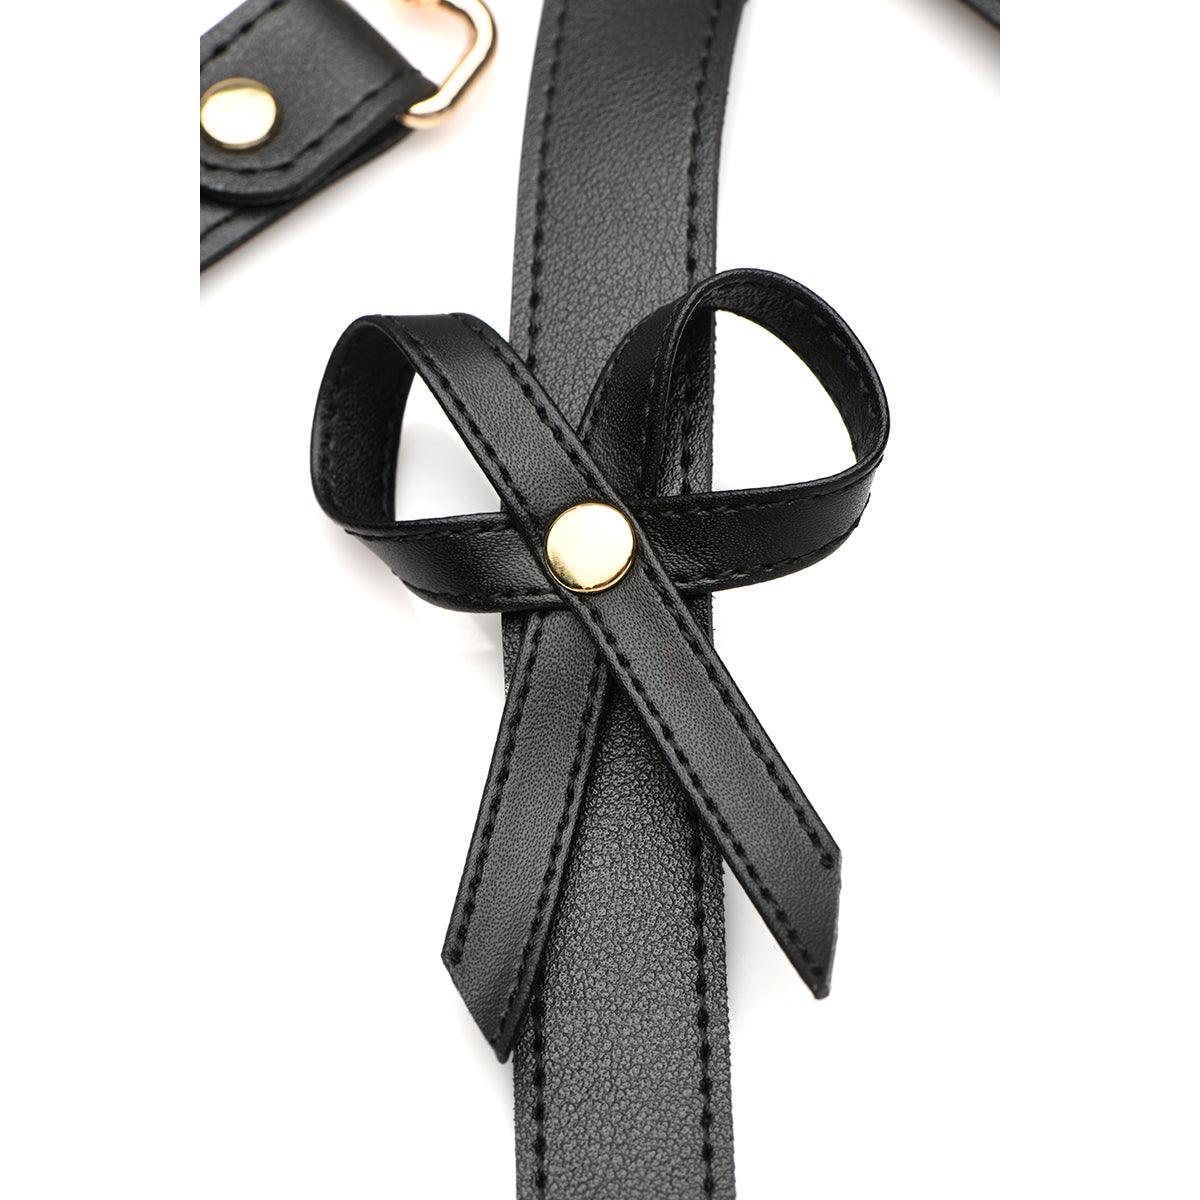 Bondage Harness with Bows - Black XL-2XL - shop enby